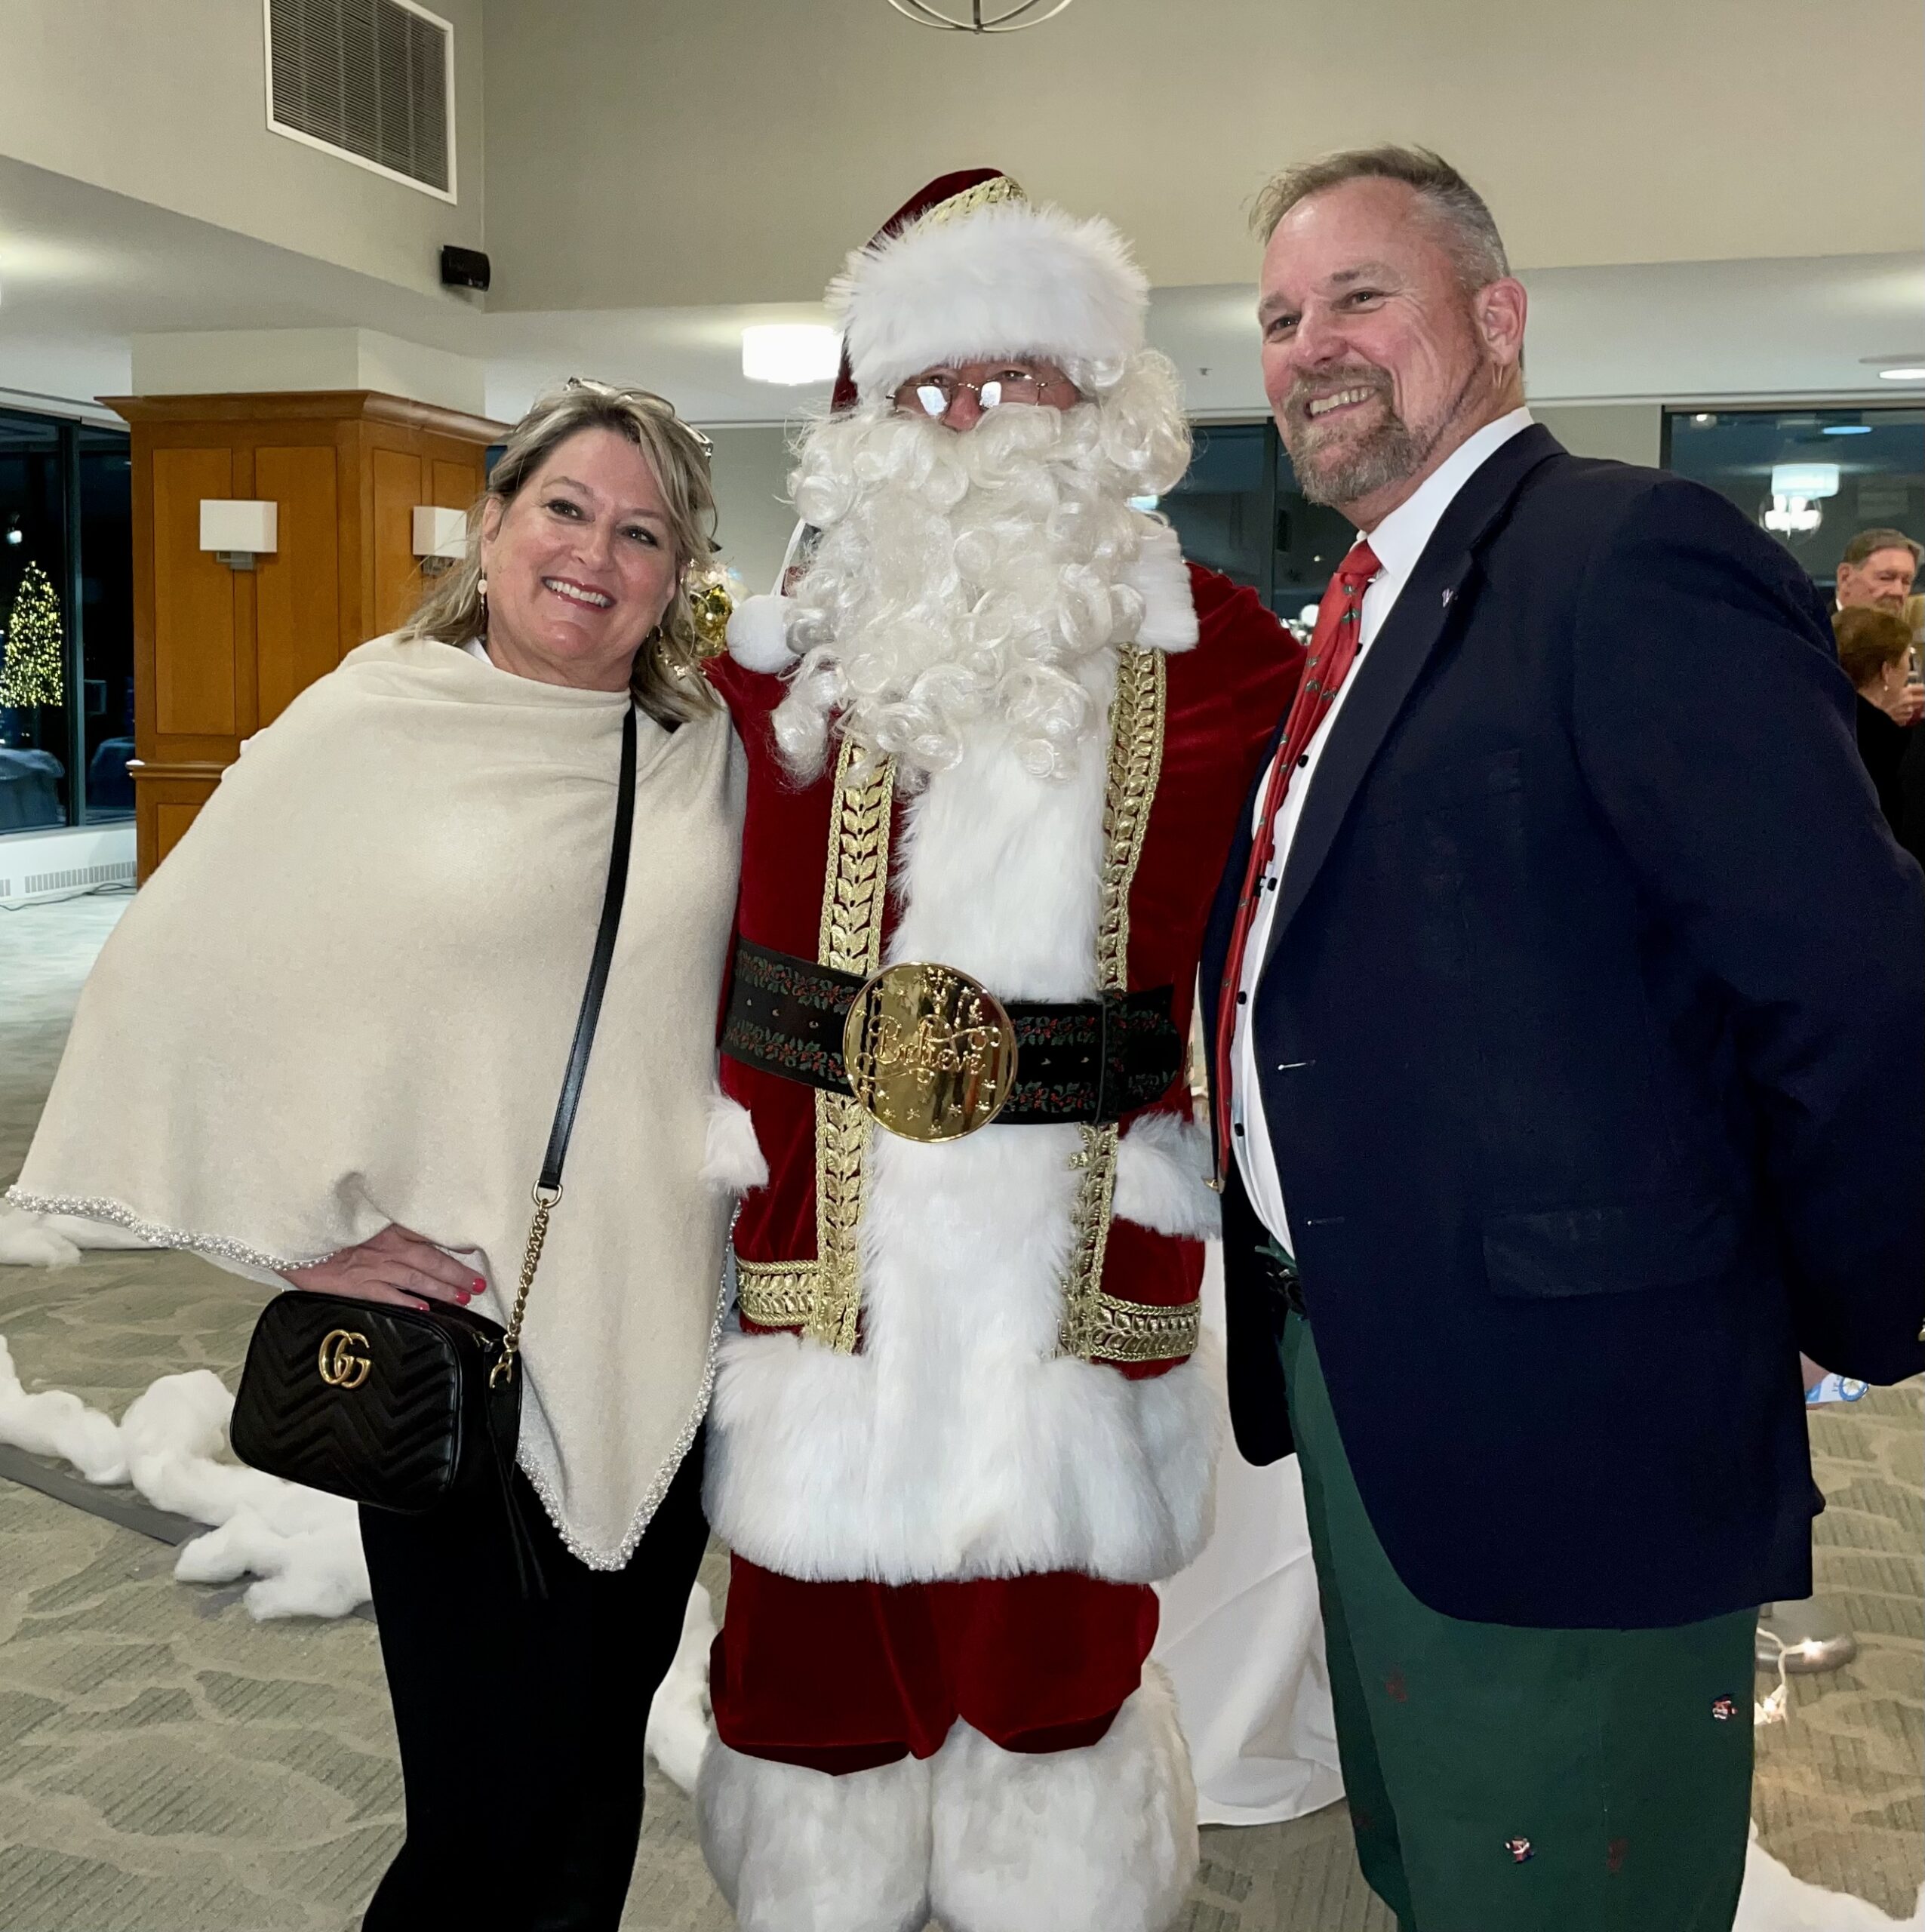 Santa Smiling with Man and Woman